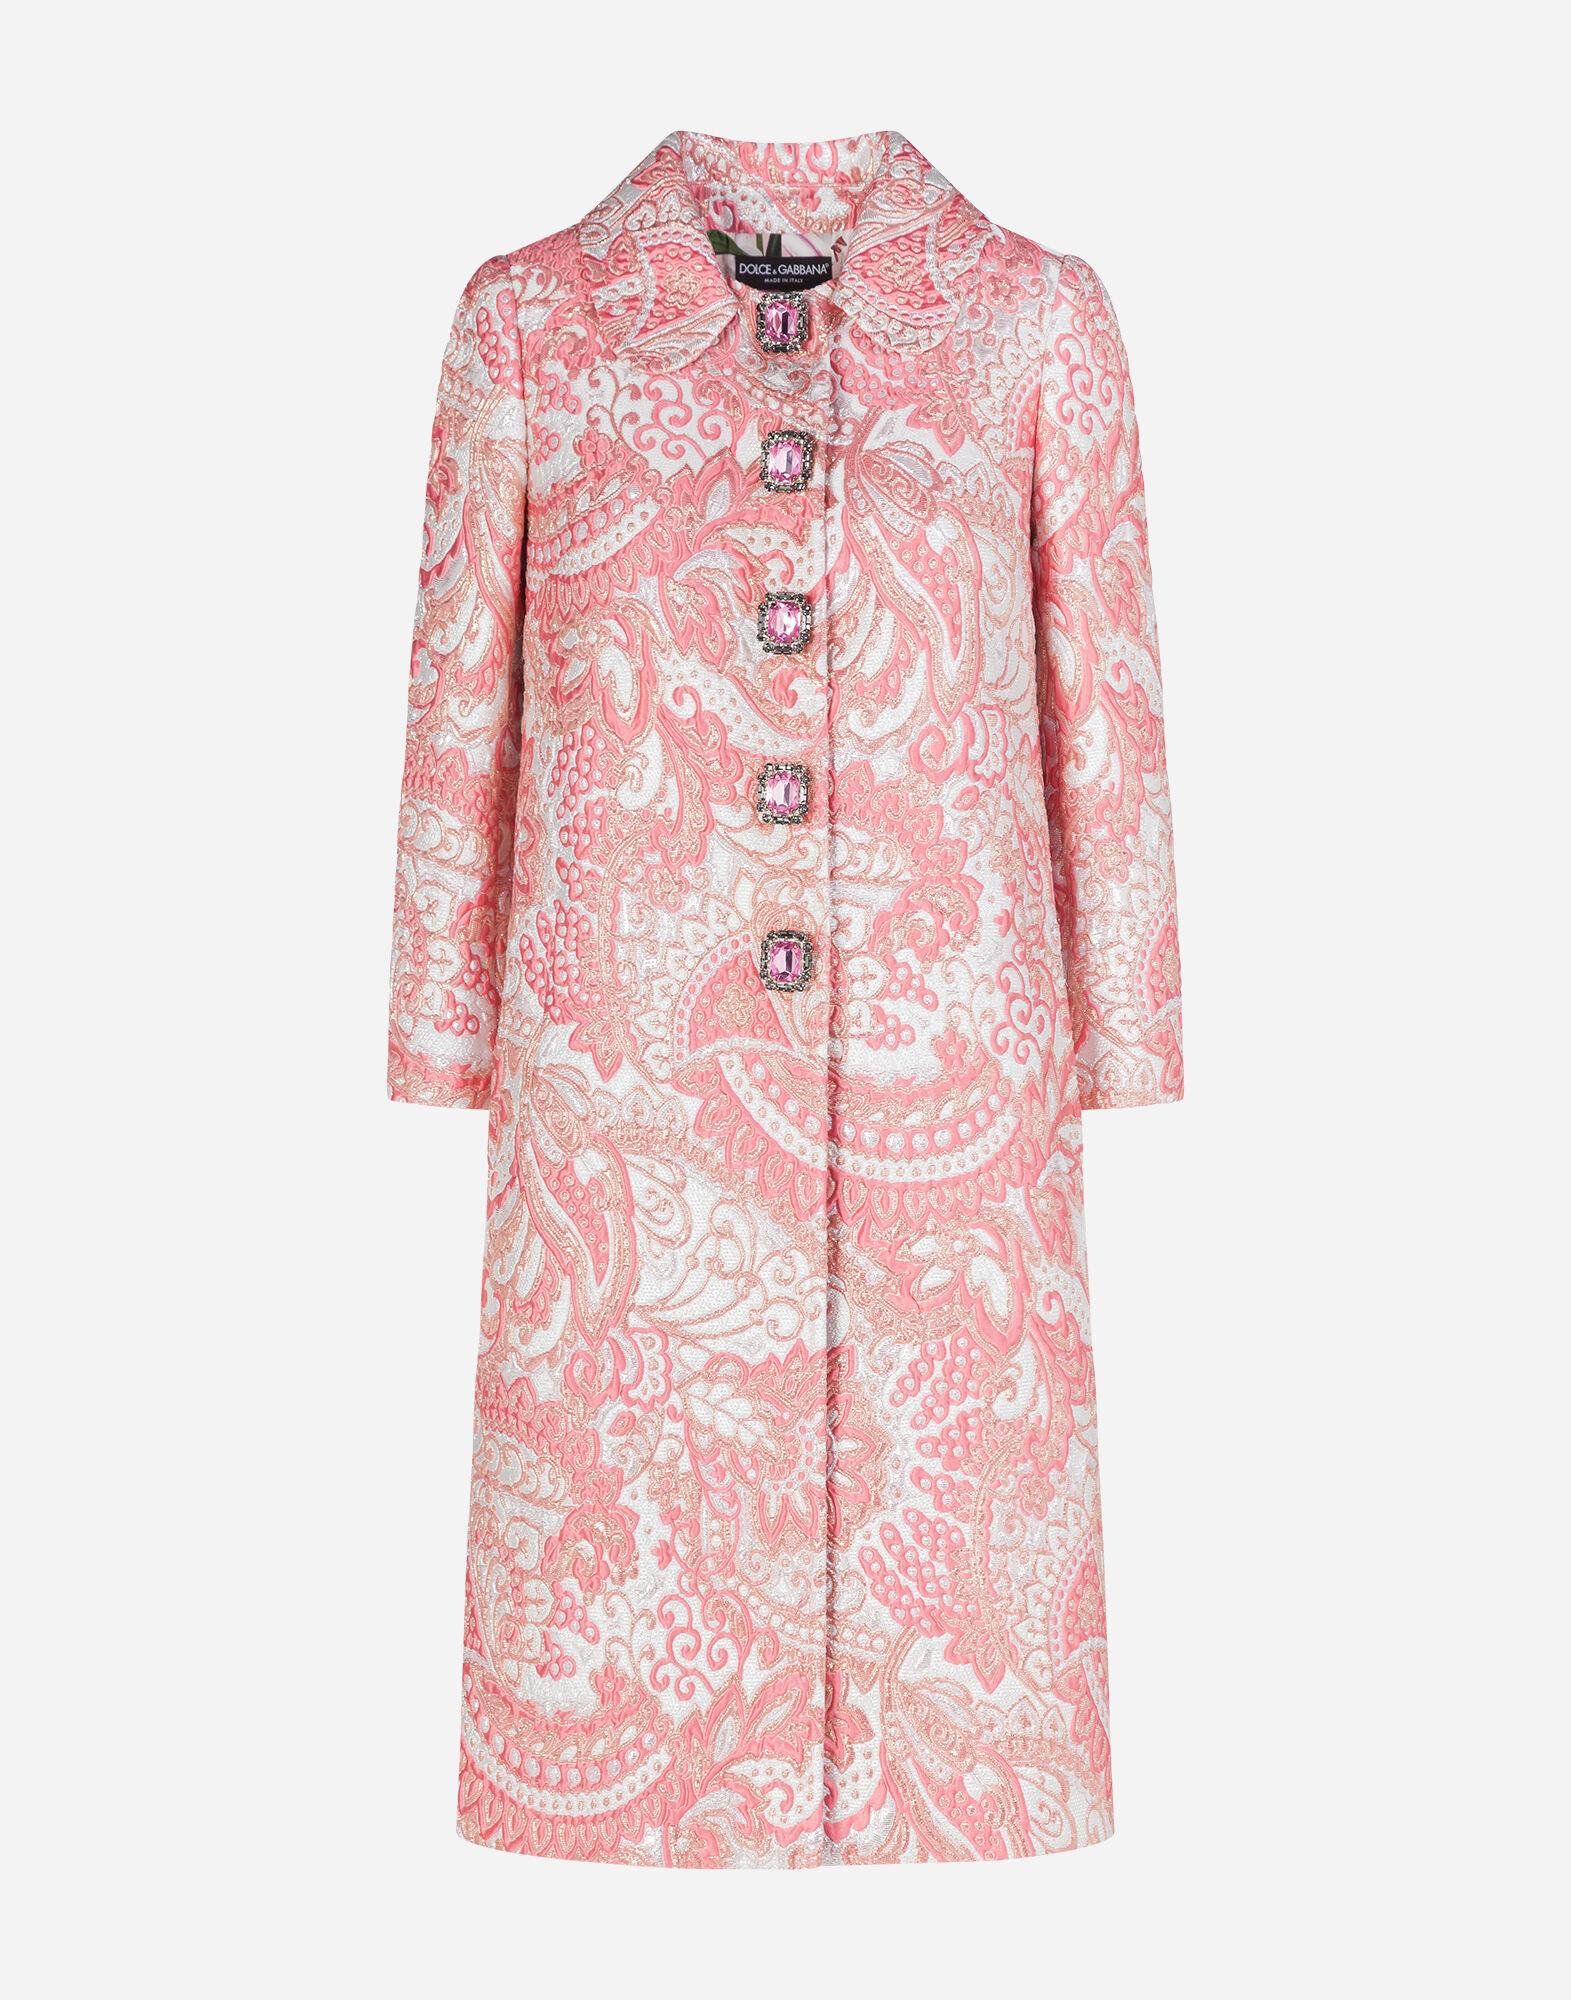 Dolce & Gabbana Metallic Silk-blend Jacquard Coat in Pink - Lyst